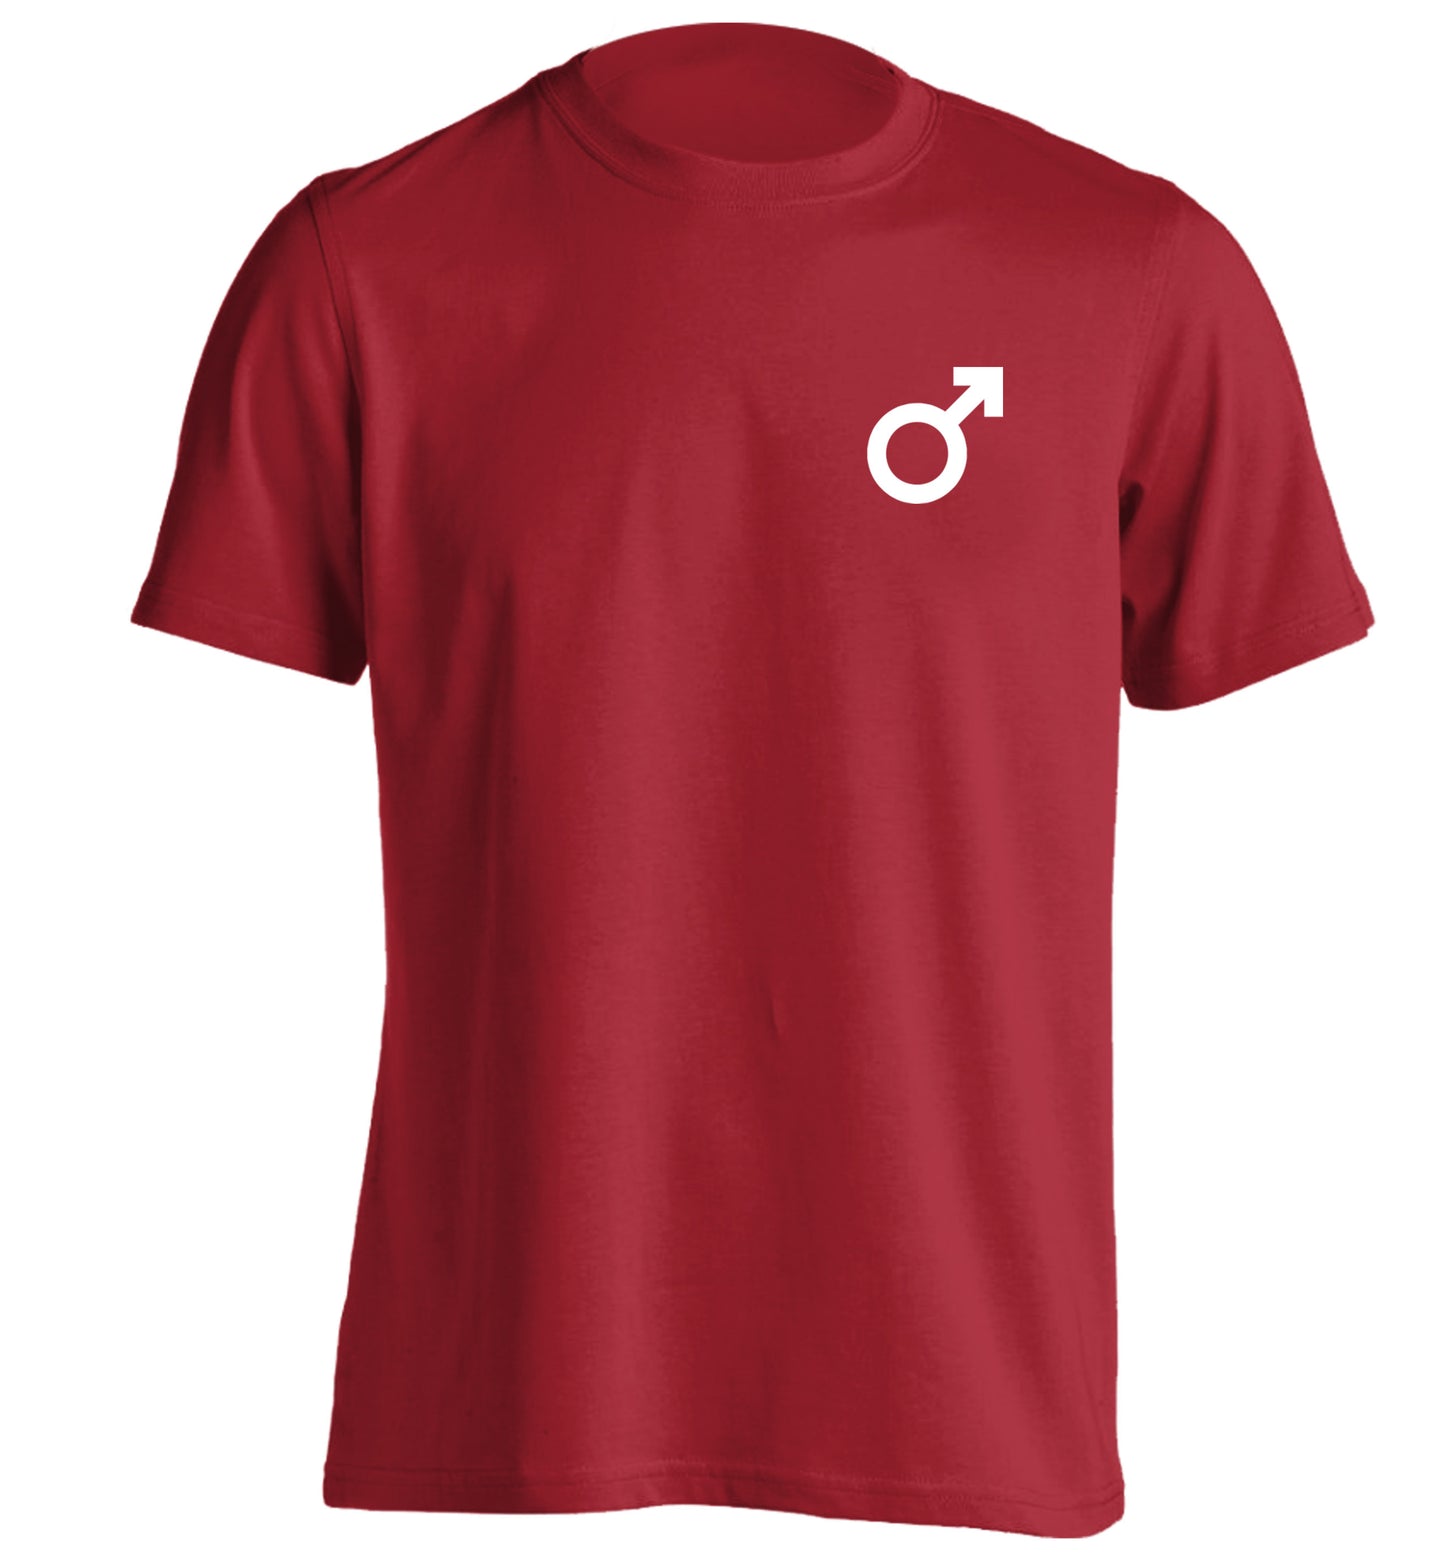 Male symbol pocket adults unisex red Tshirt 2XL